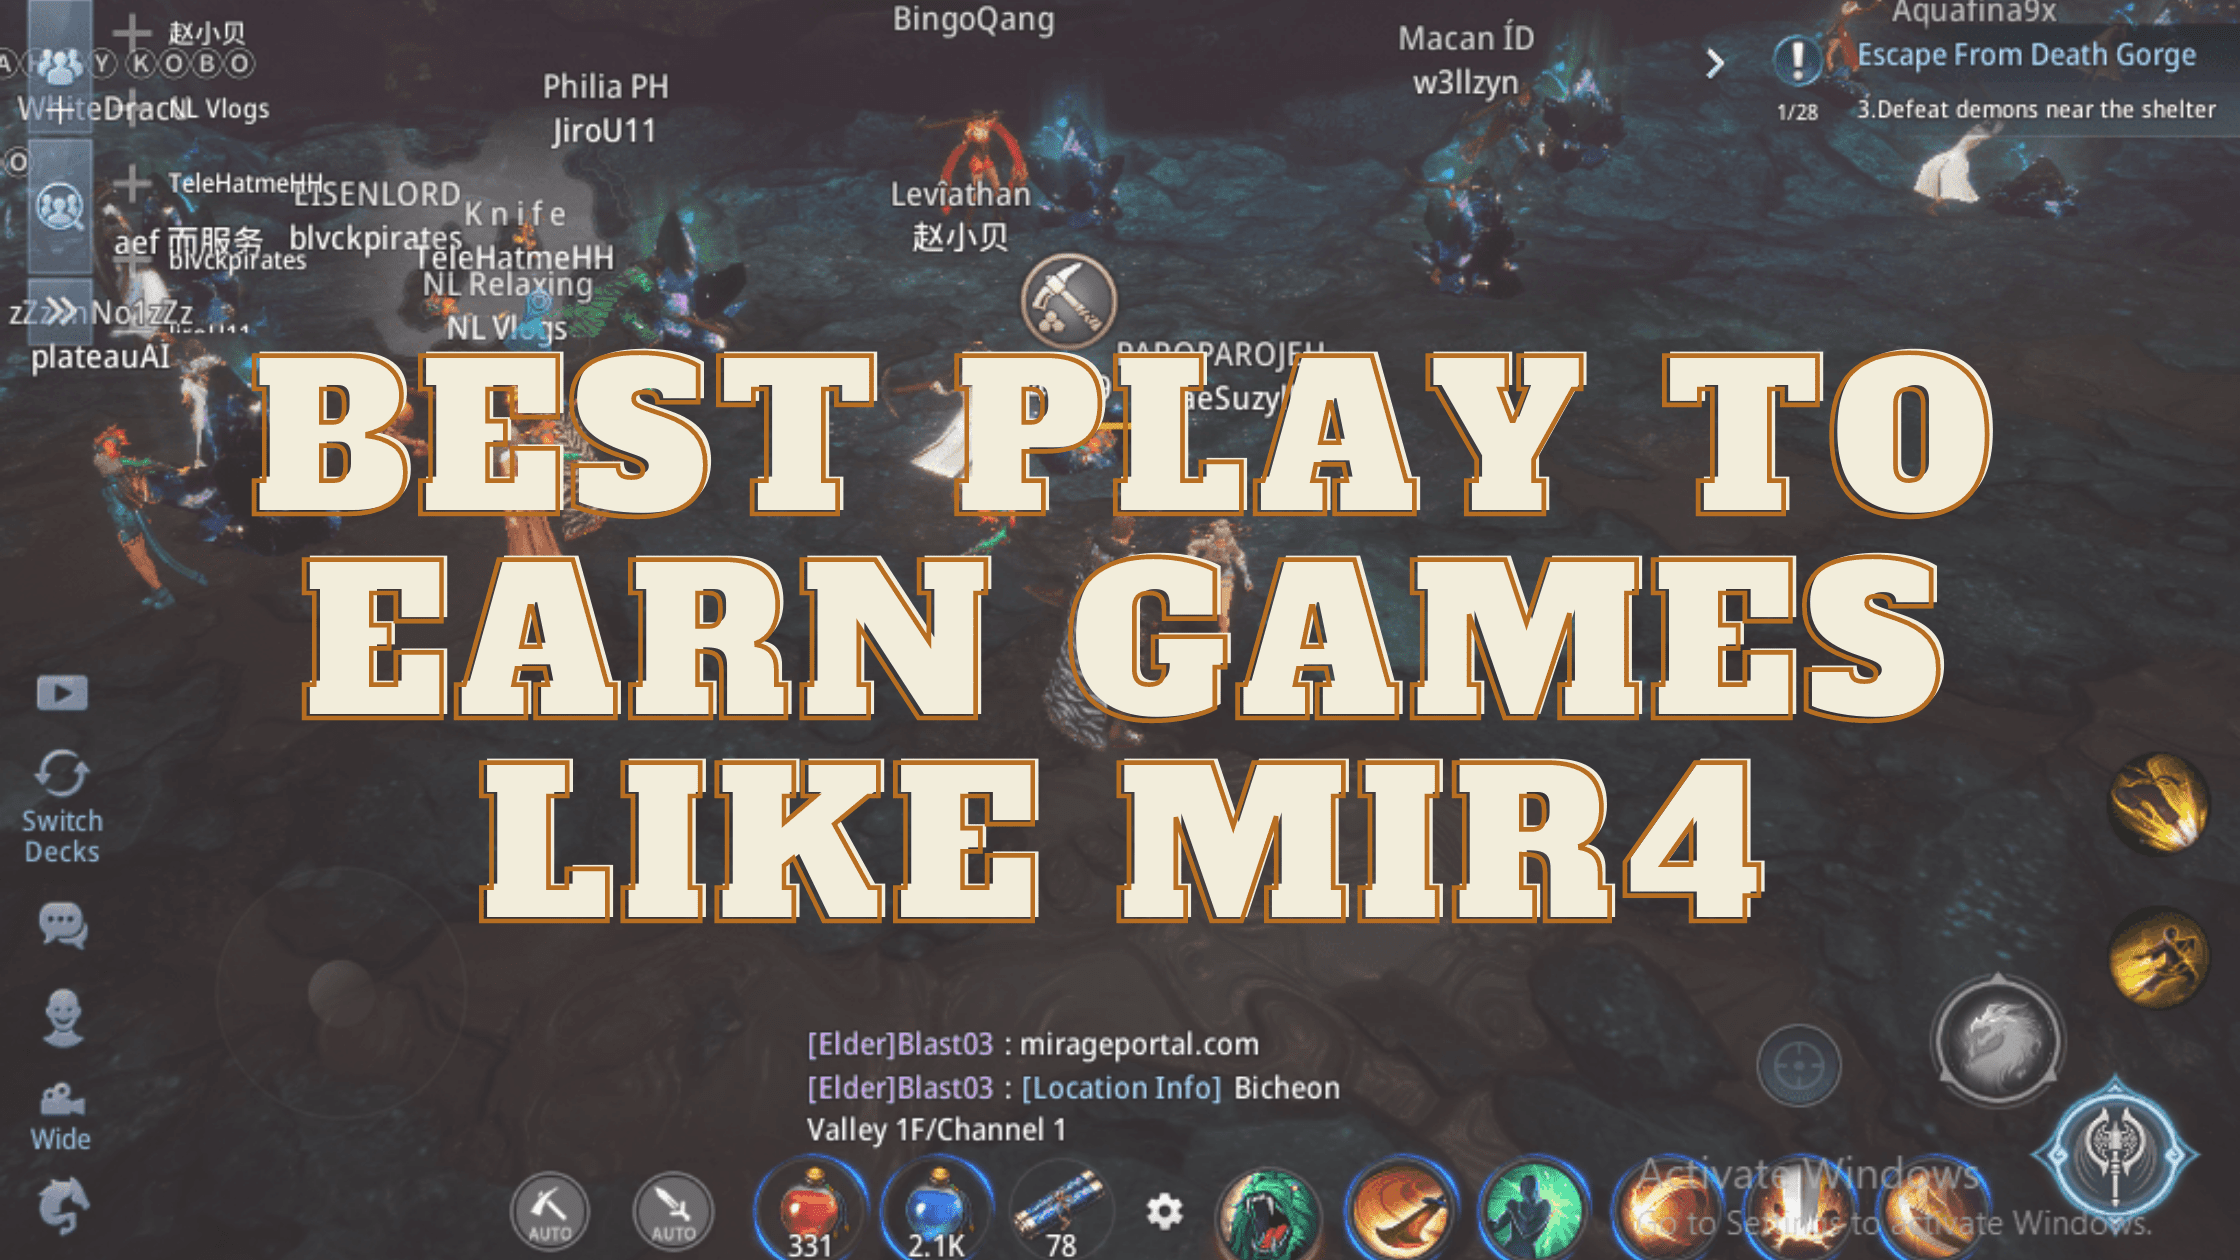 Best Play To earn Games Like mir4